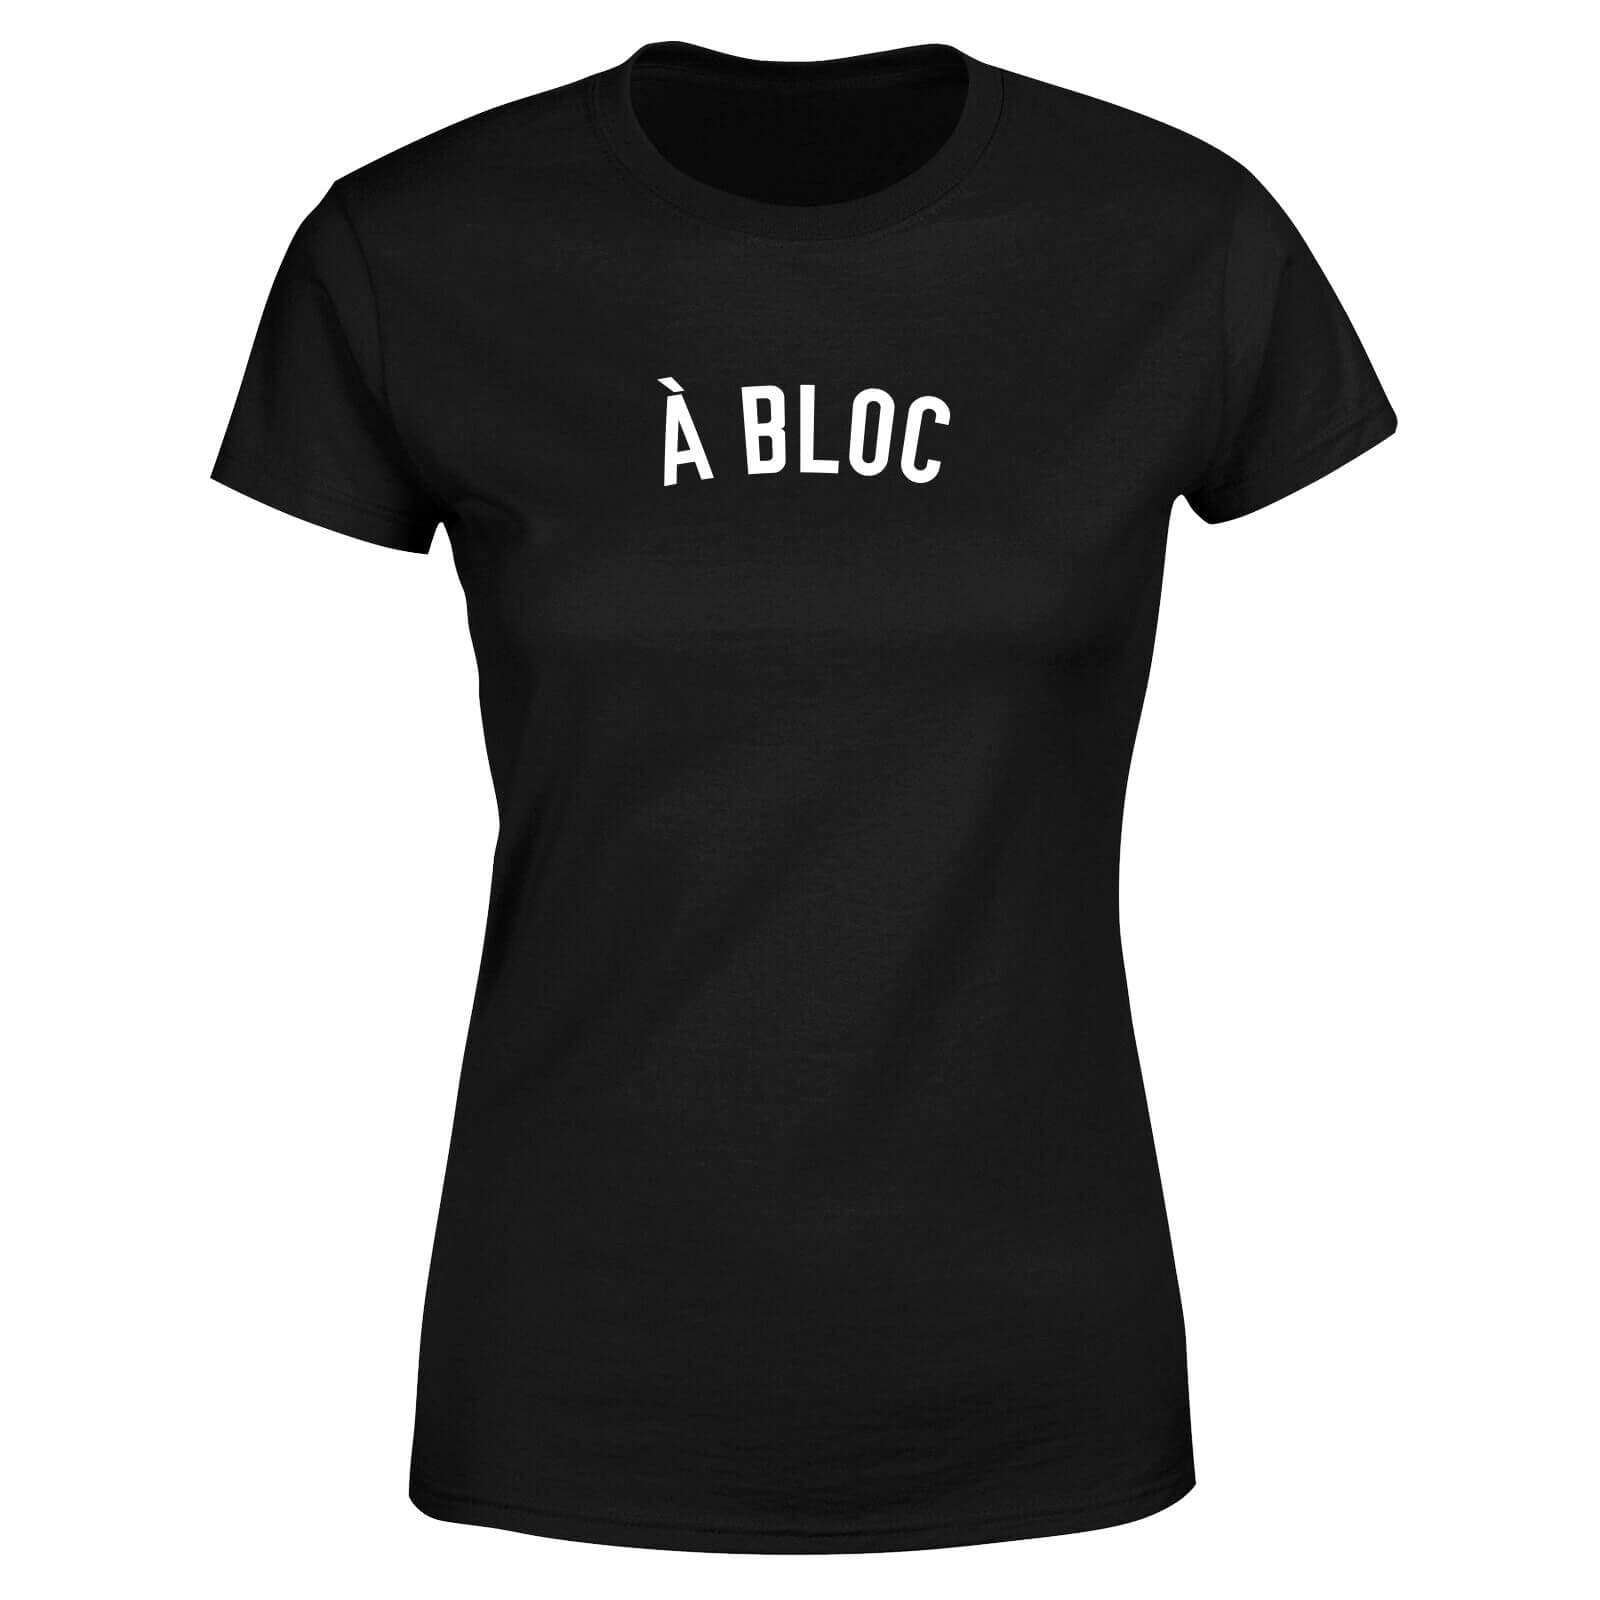 A Bloc Women's T-Shirt - Black - XS - Black